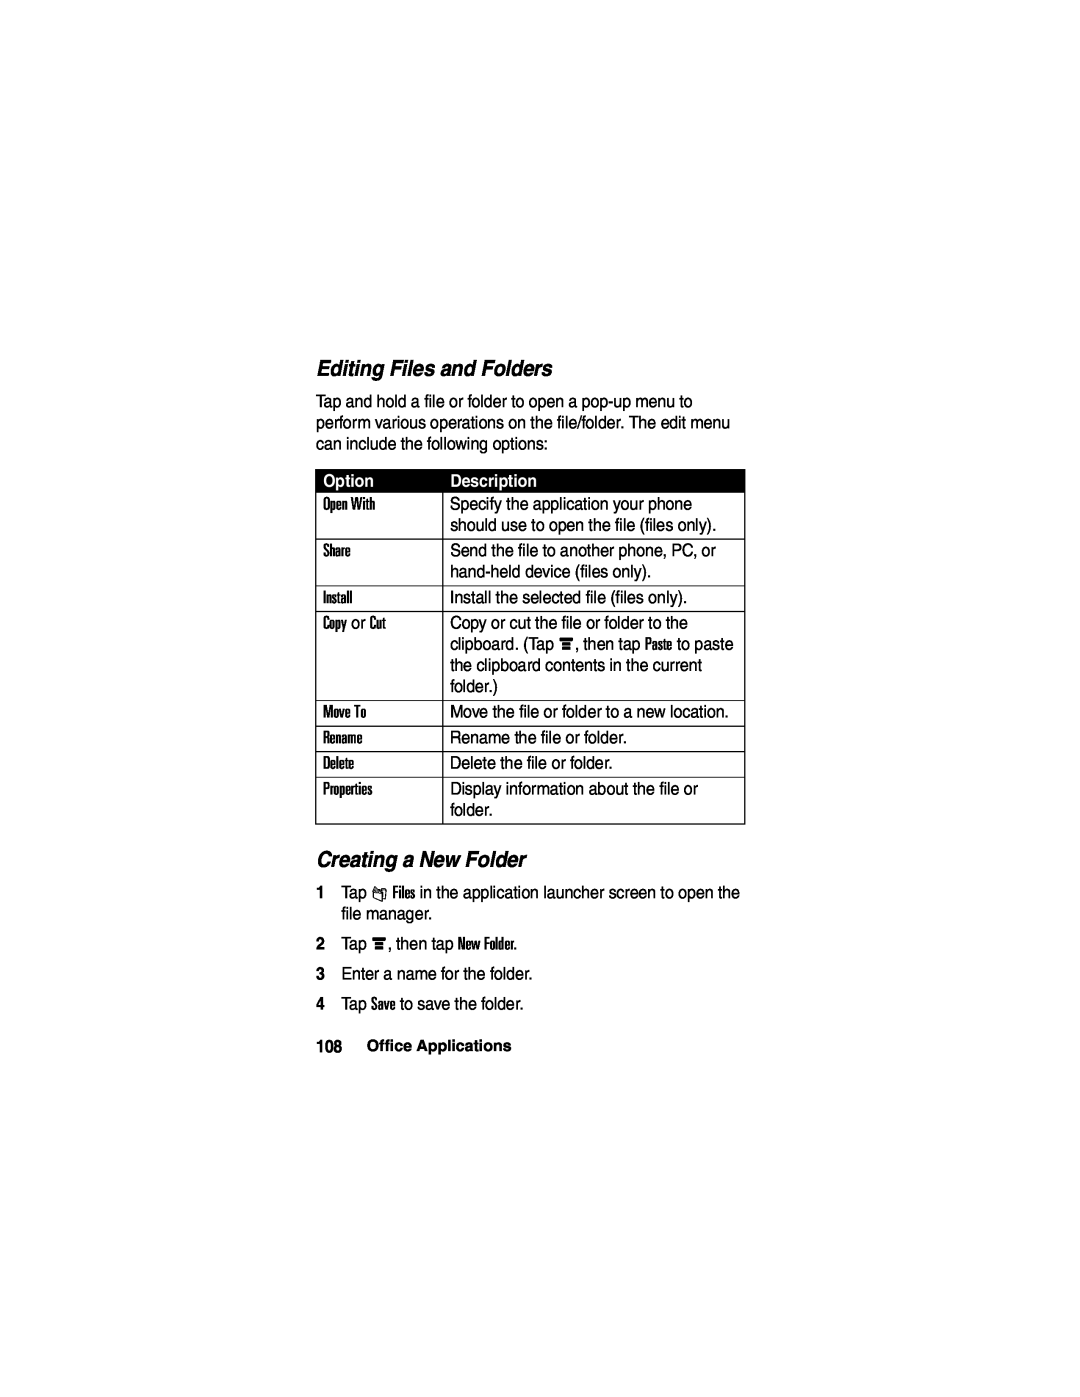 Motorola A780 manual Editing Files and Folders, Creating a New Folder, Option, Description, Office Applications 